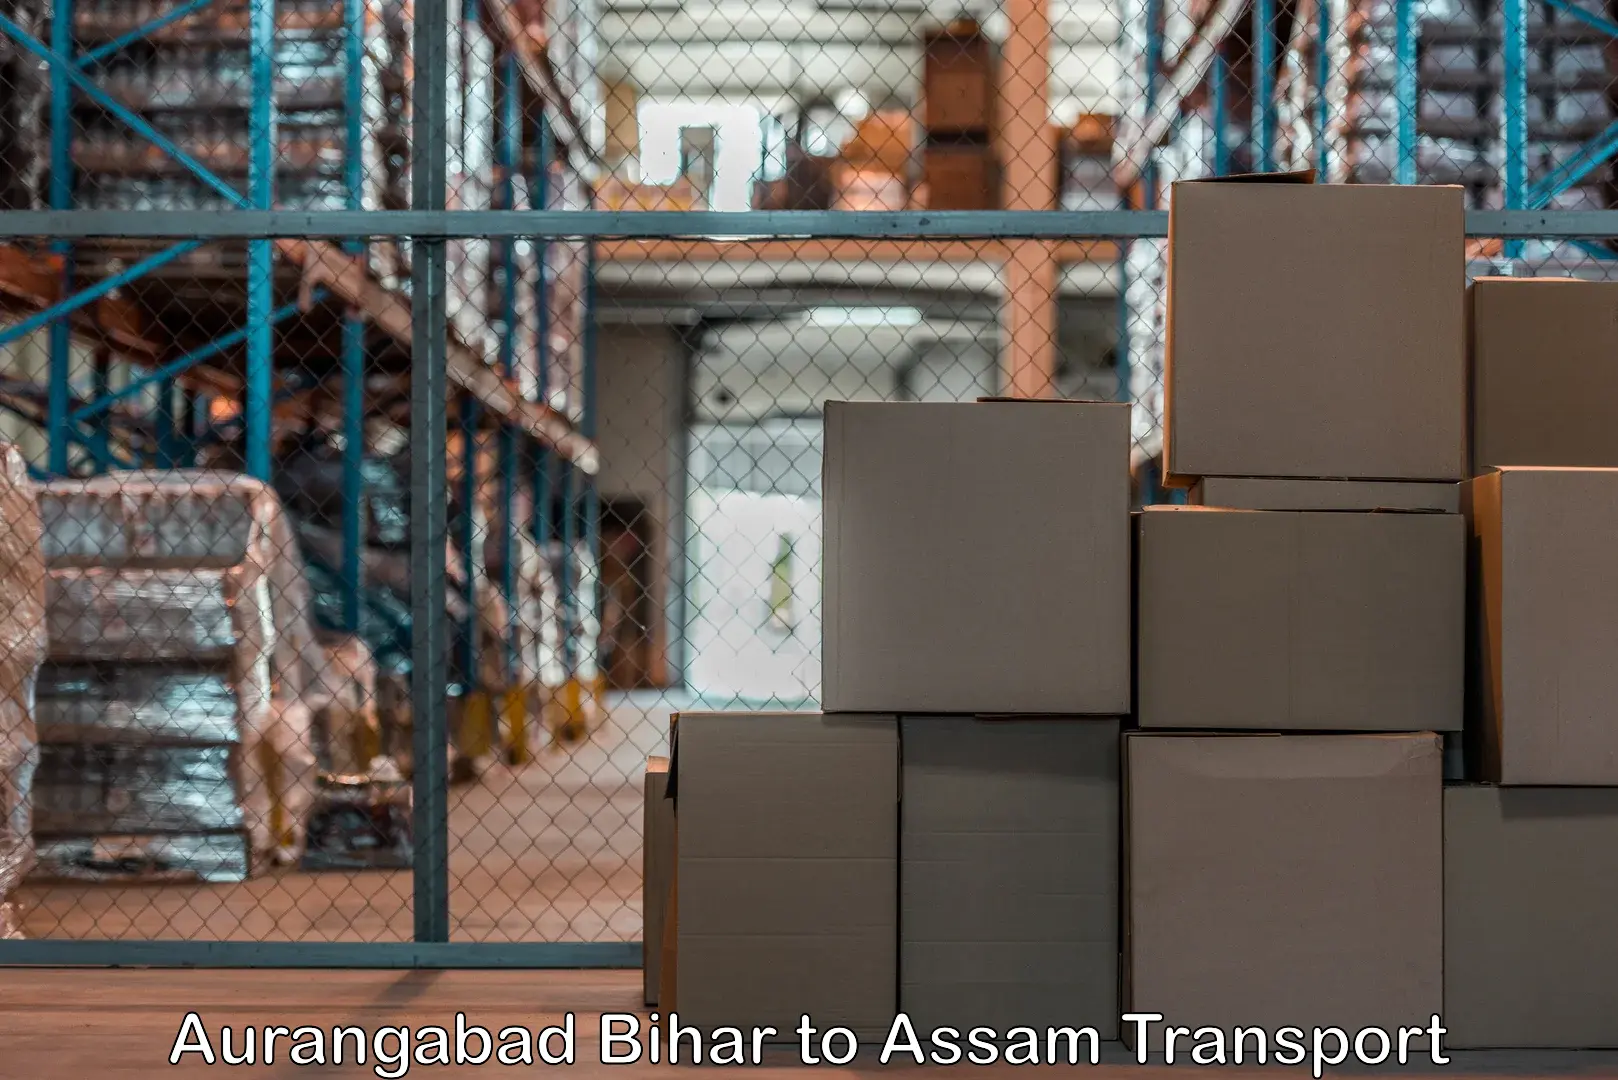 Goods delivery service Aurangabad Bihar to Digboi